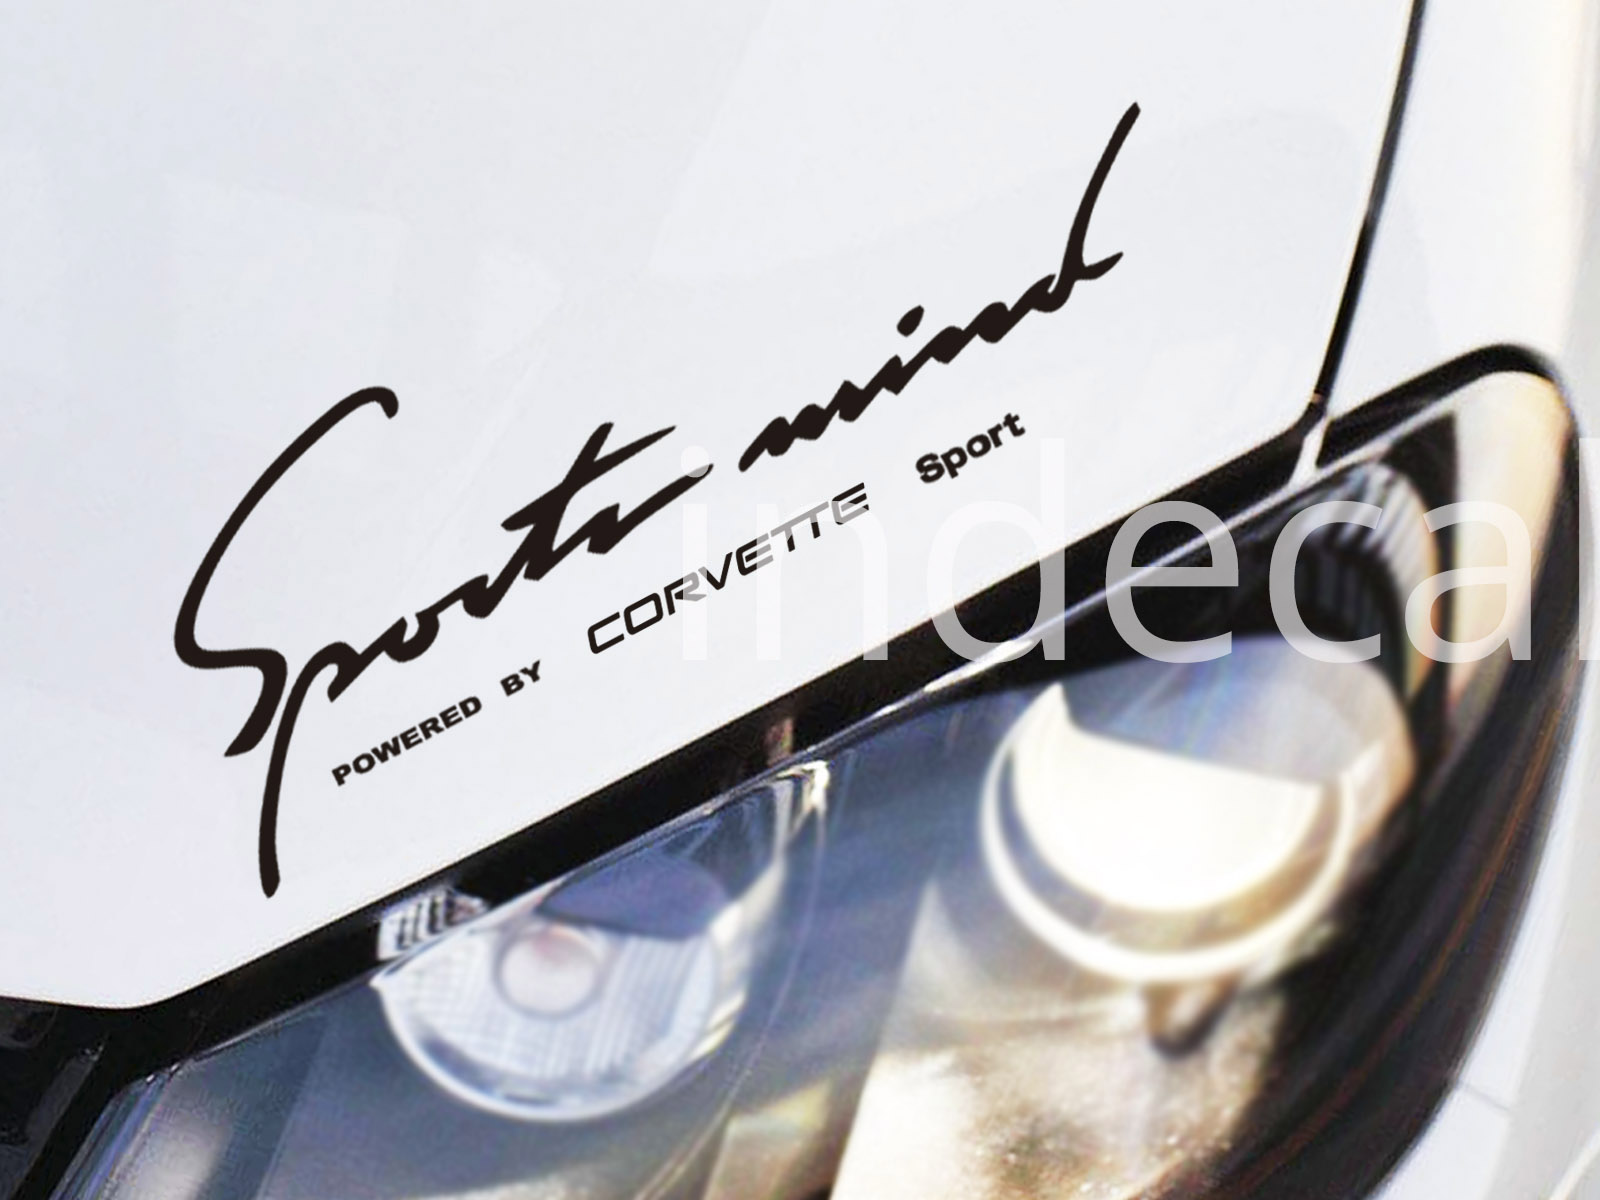 1 x Corvette Sports Mind Sticker - Black